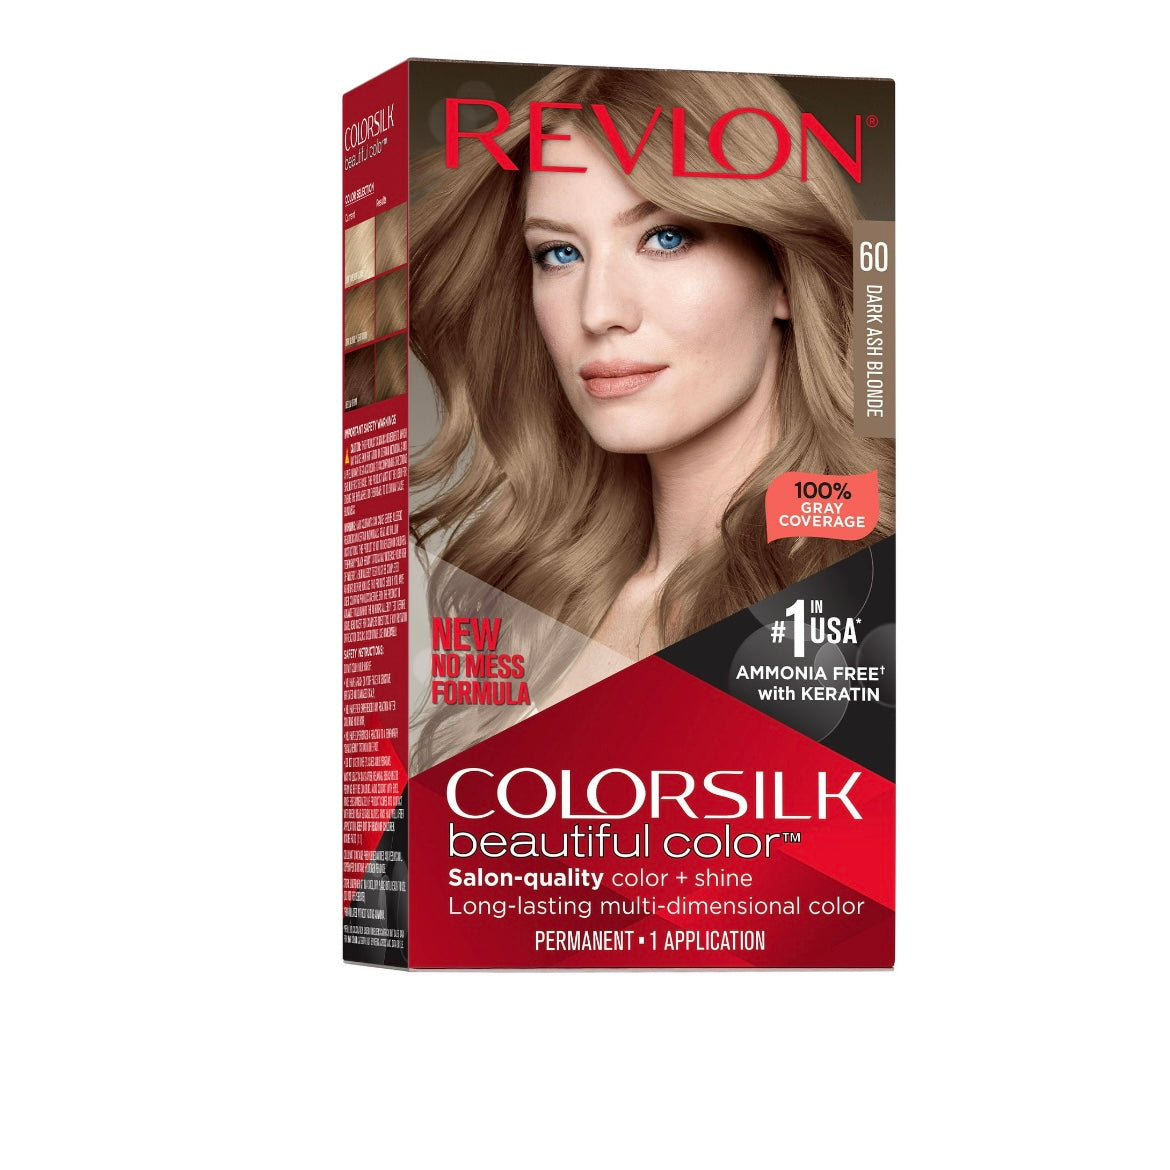 Revlon Colorsilk Beautiful Permanent Hair Color, No Mess Formula, 1 Pack